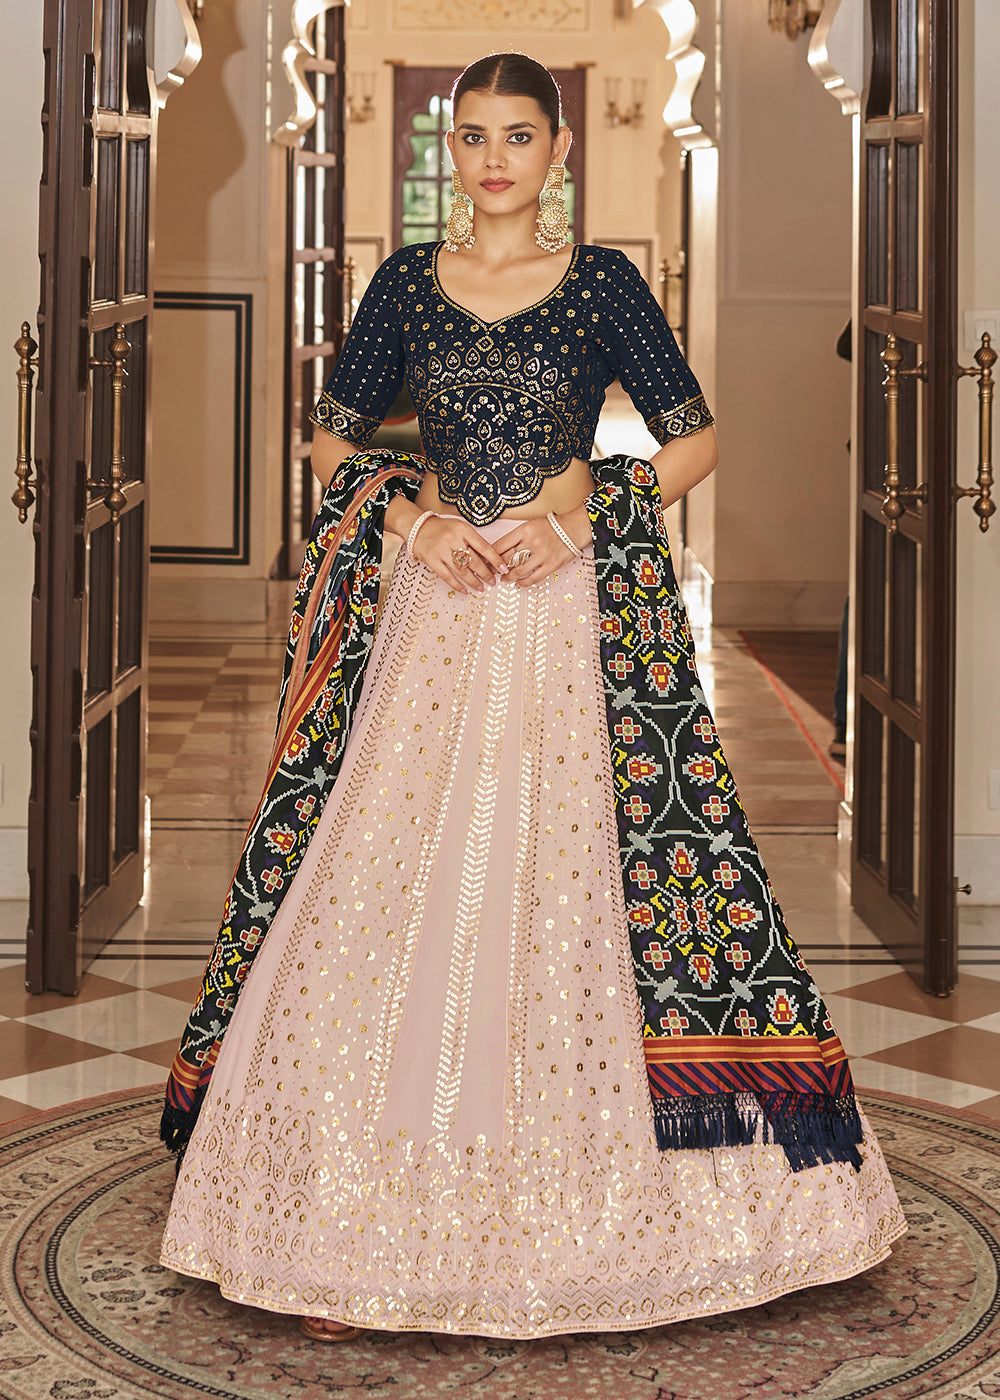 Buy Now Enchanting Sequins Light Pink & Blue Wedding Lehenga Choli Online in USA, UK, Canada & Worldwide at Empress Clothing. 